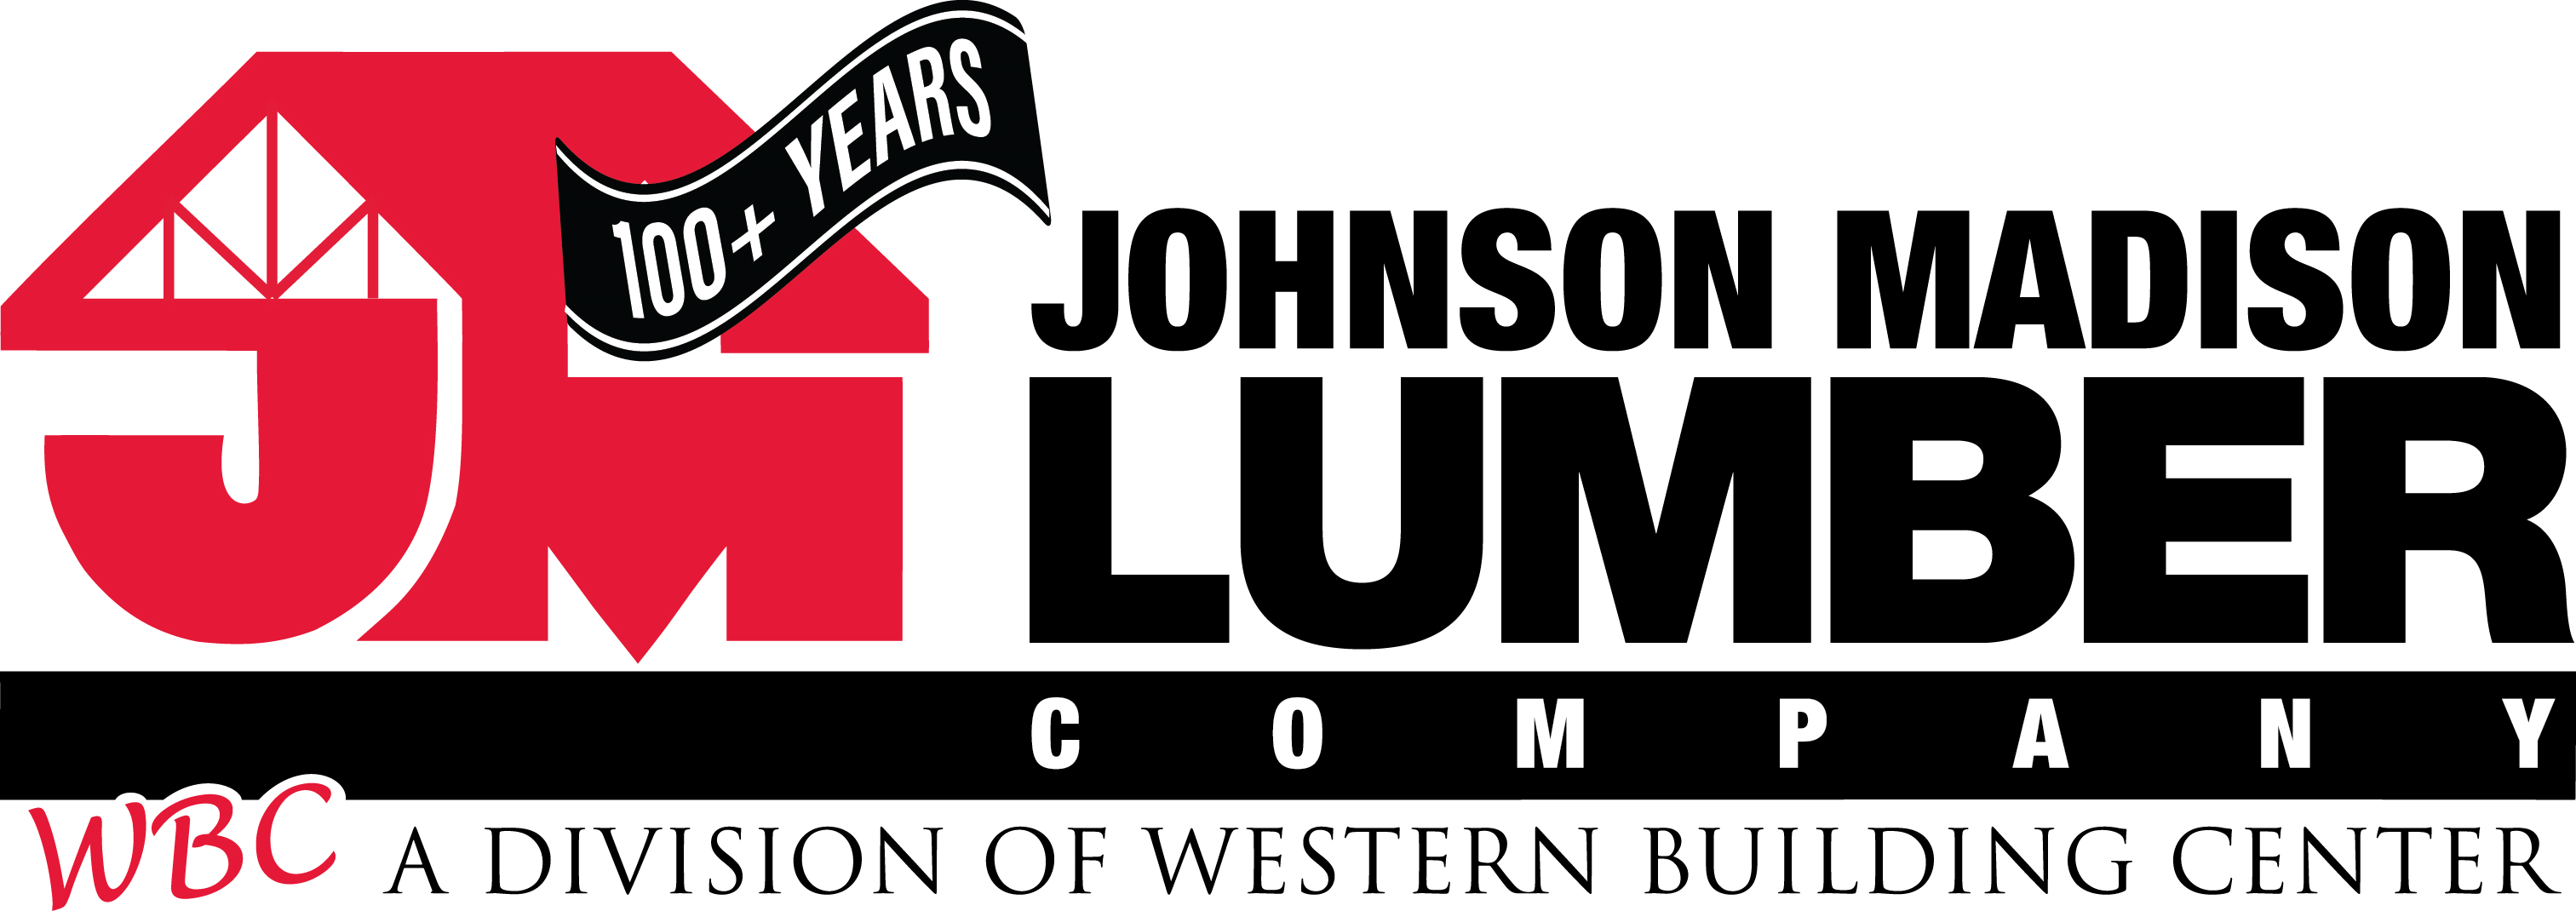 Johnson-Madison Lumber